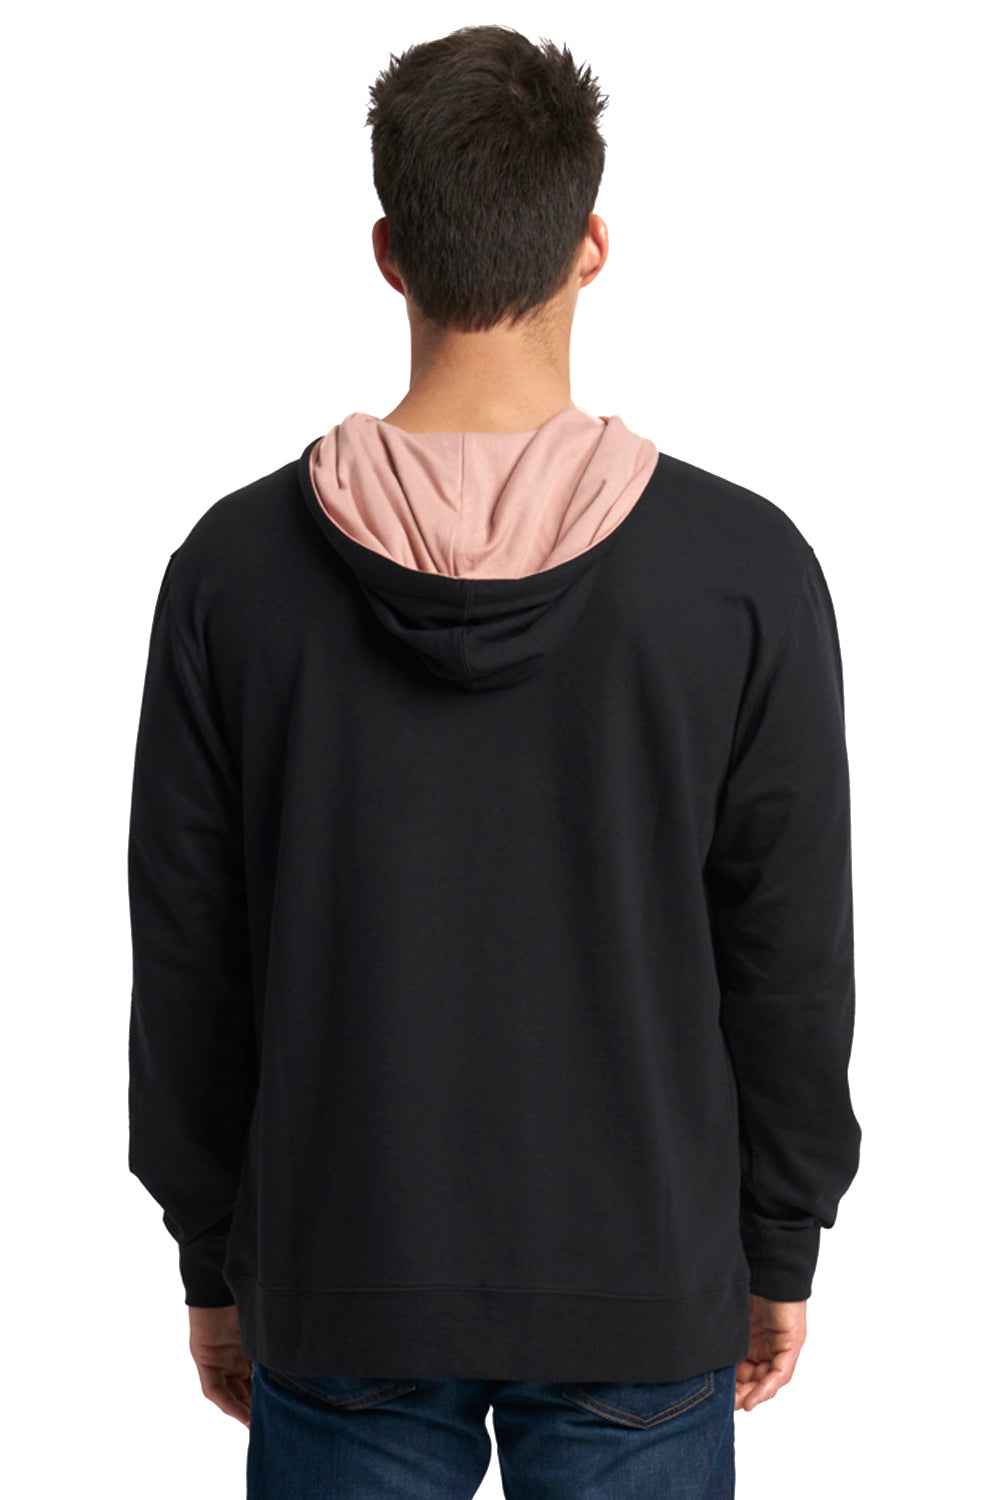 Next Level 9301 French Terry Fleece Hooded Sweatshirt Hoodie Black/Desert Pink Back